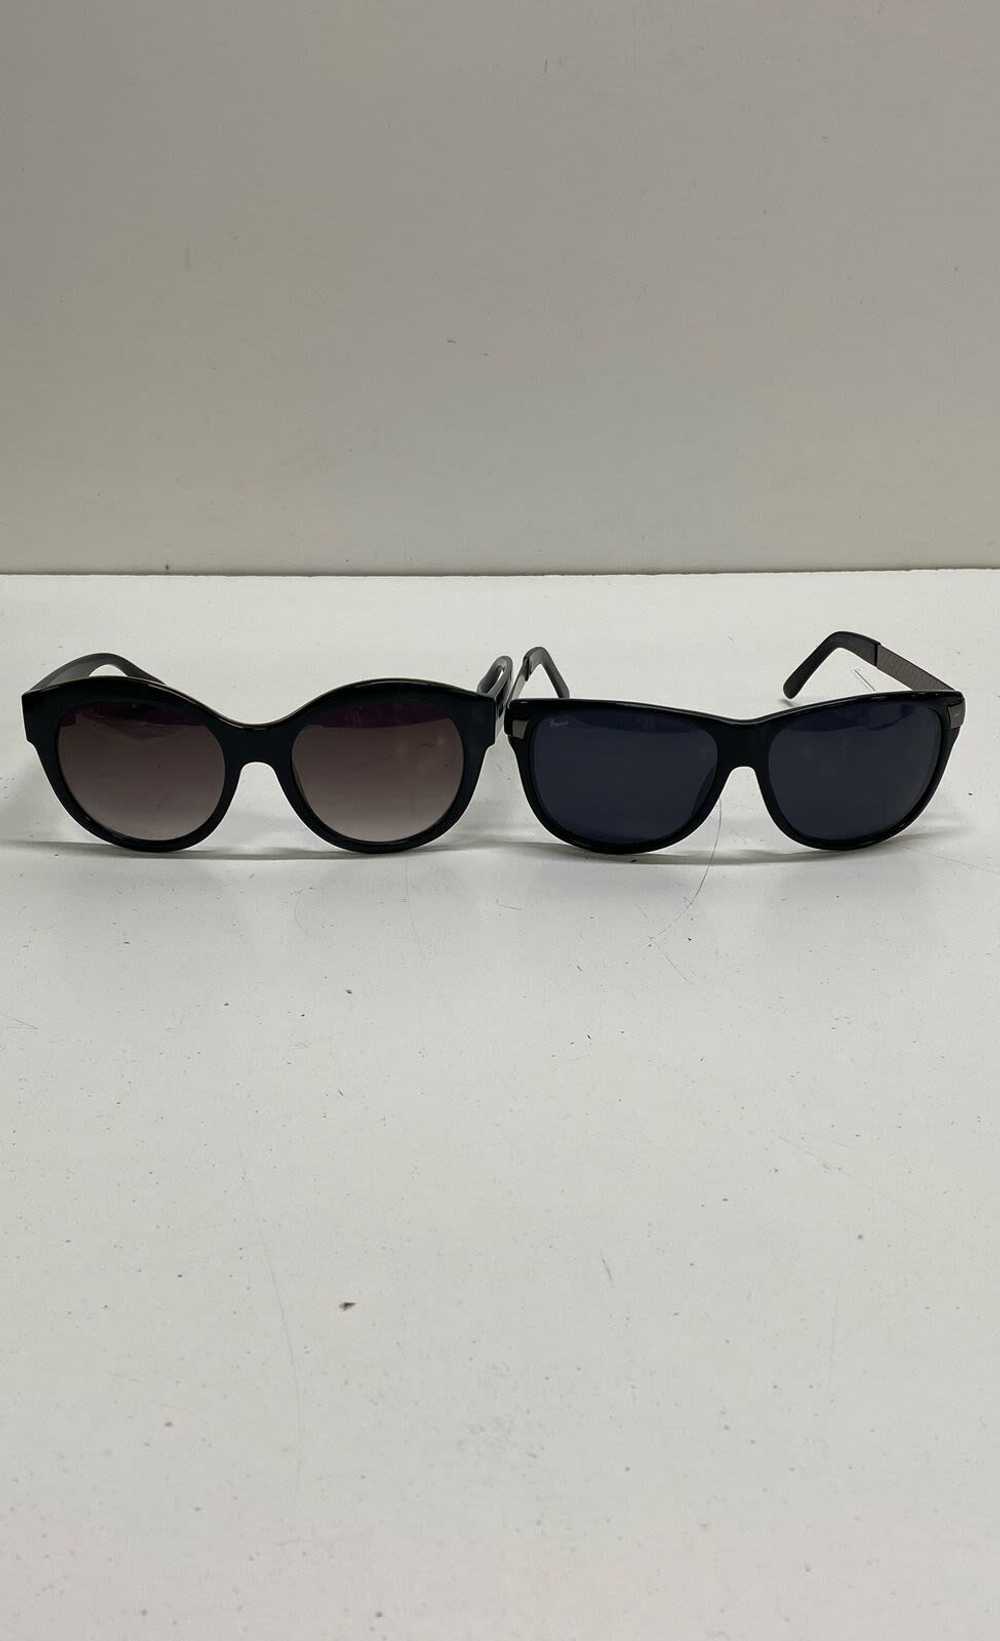 Unbranded Black Sunglasses - 2 Pairs No Case - image 2